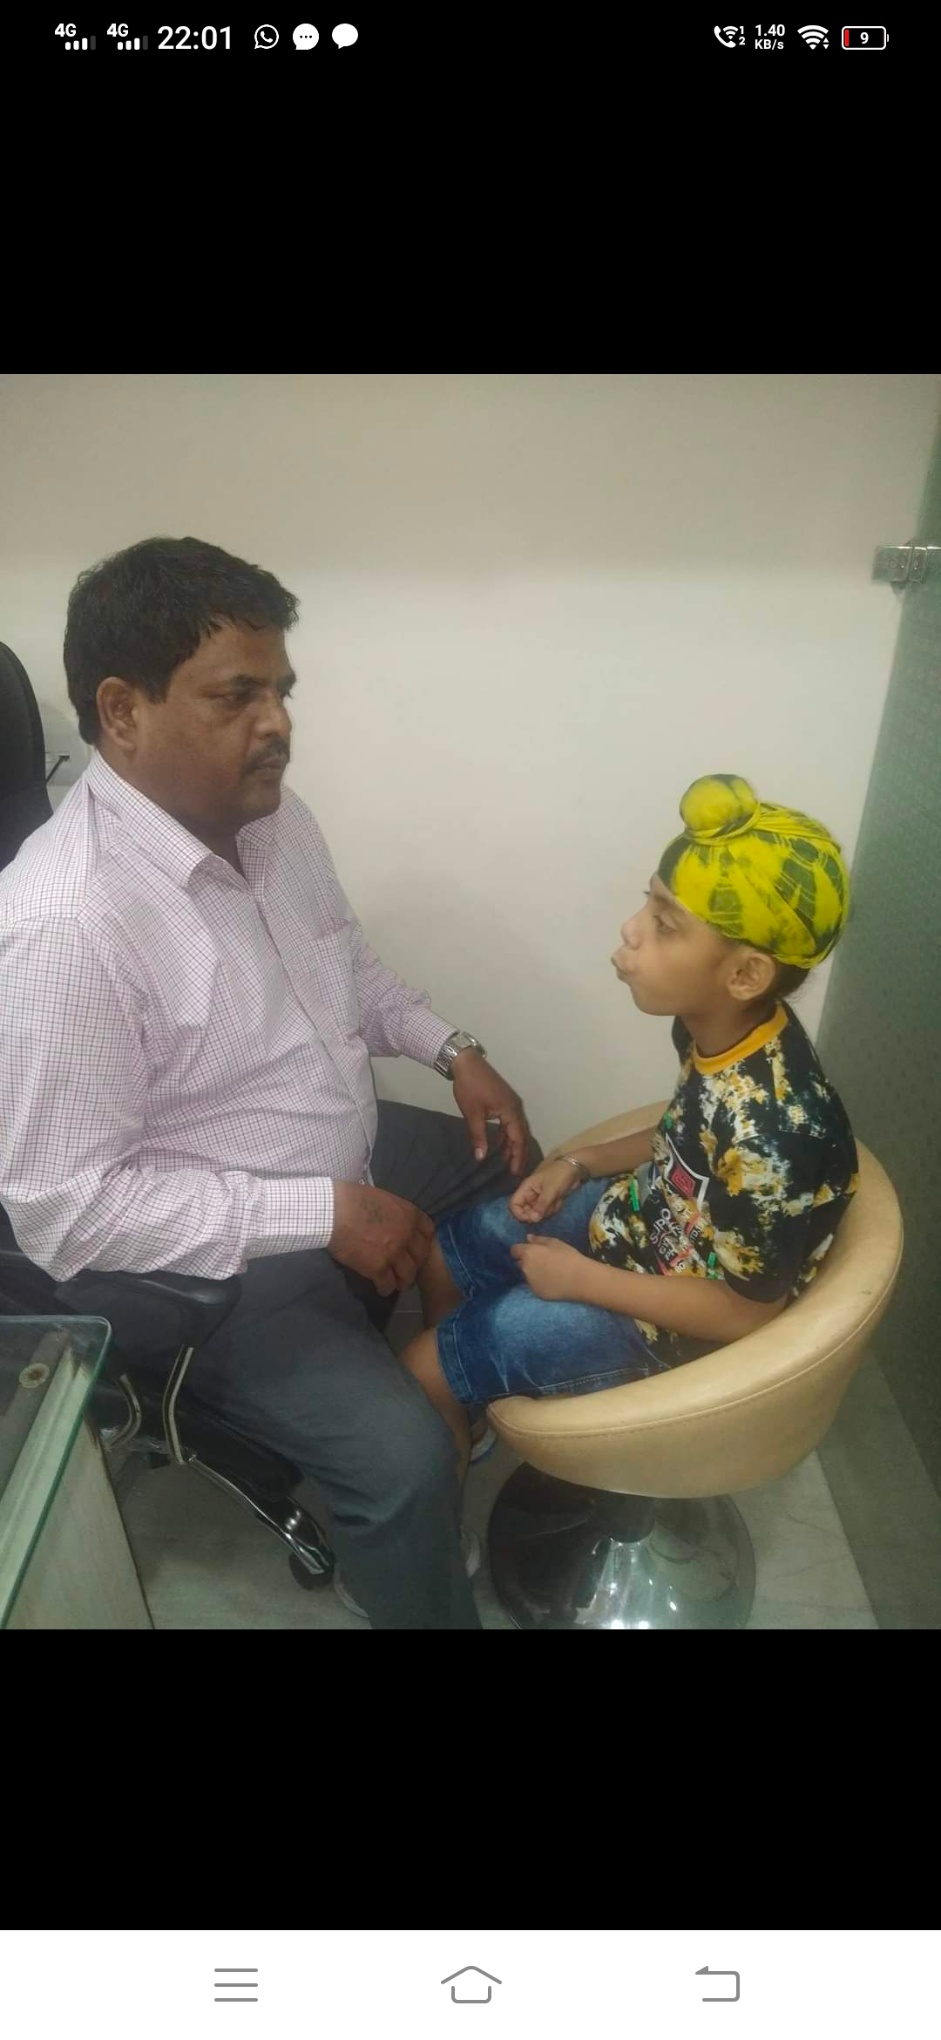 speech therapy in autism spectrum disorder in Delhi 